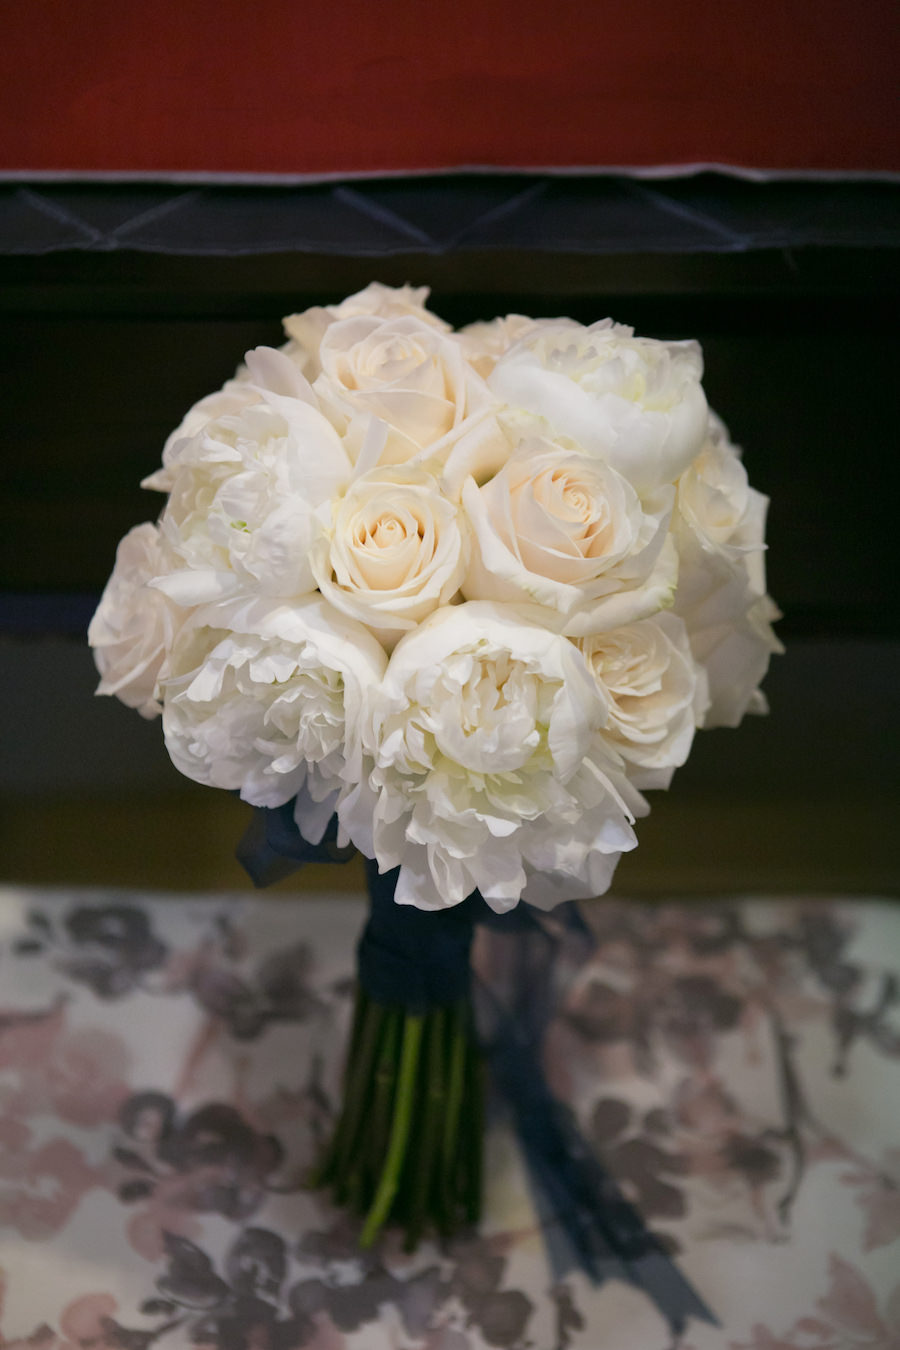 Ivory Bridal Wedding Bouquet at Tampa Wedding | Tampa Wedding Photographer Carrie Wildes Photography